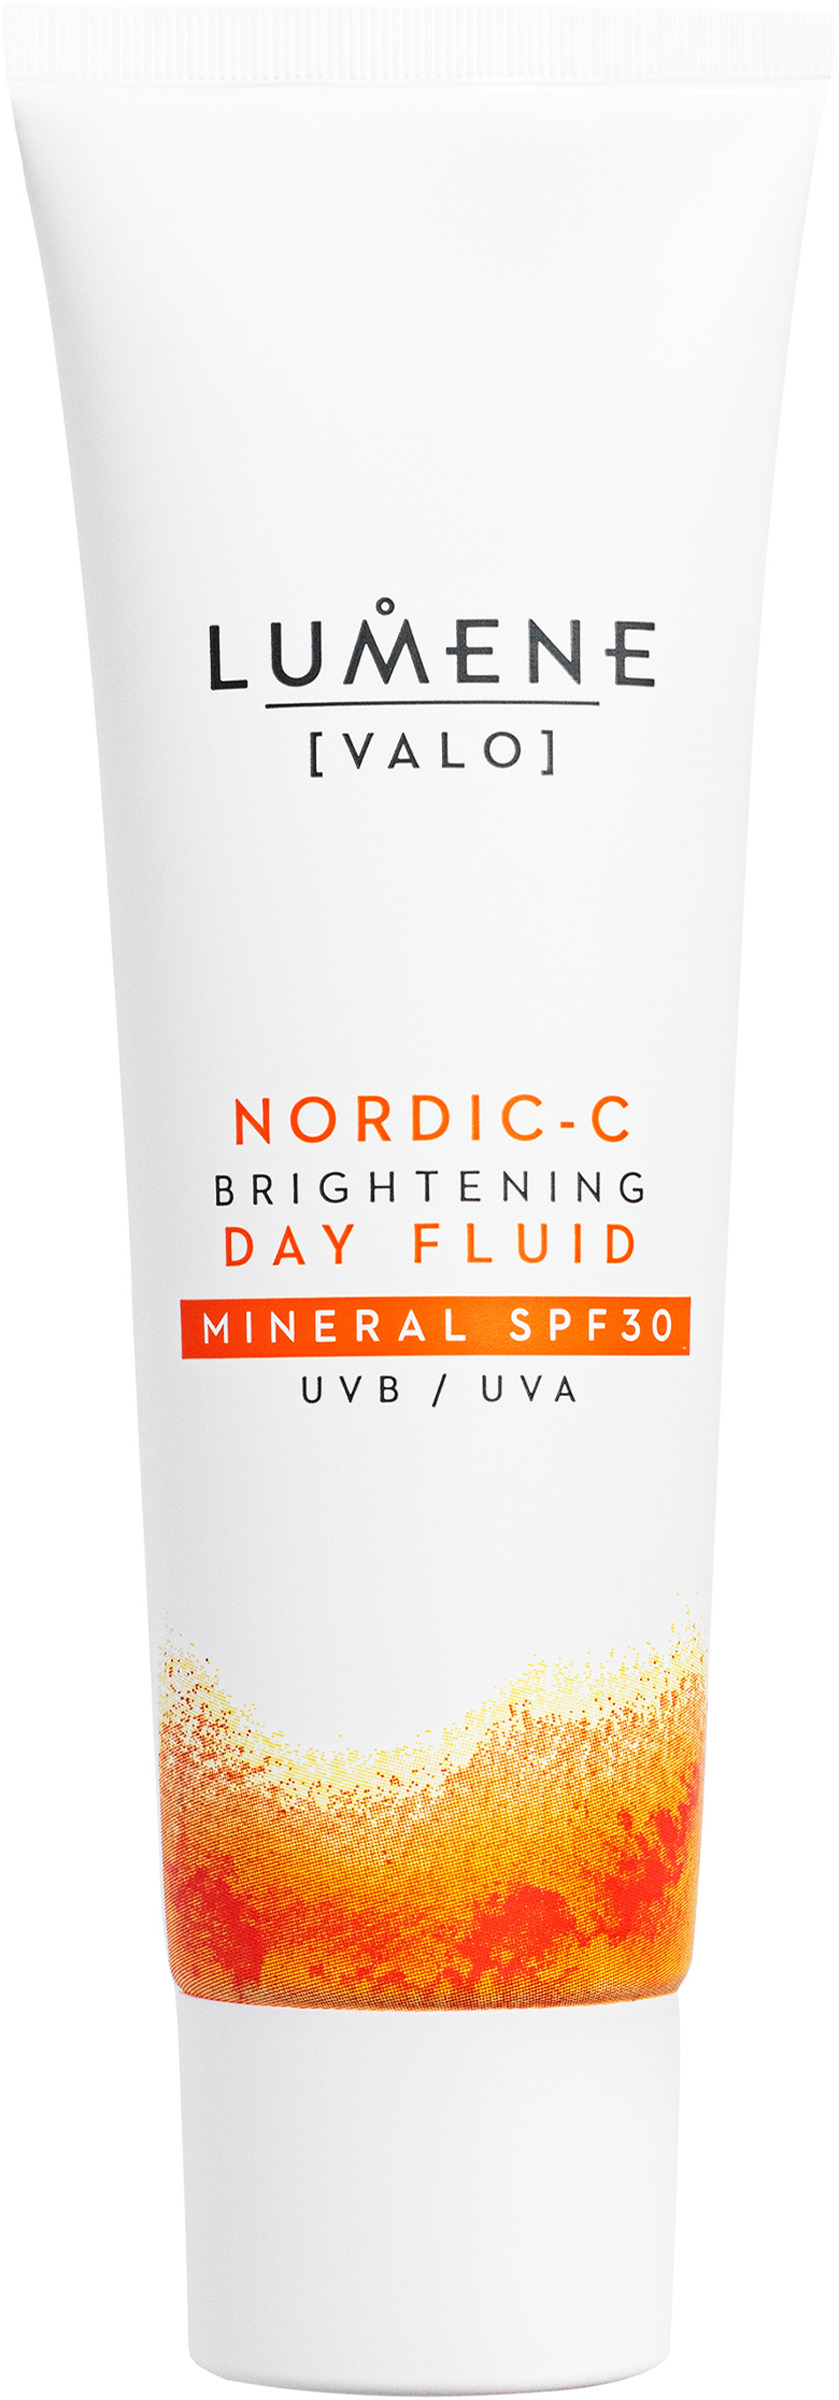 Lumene Nordic-C Valo SPF30 Brightening Day Fluid 50 ml